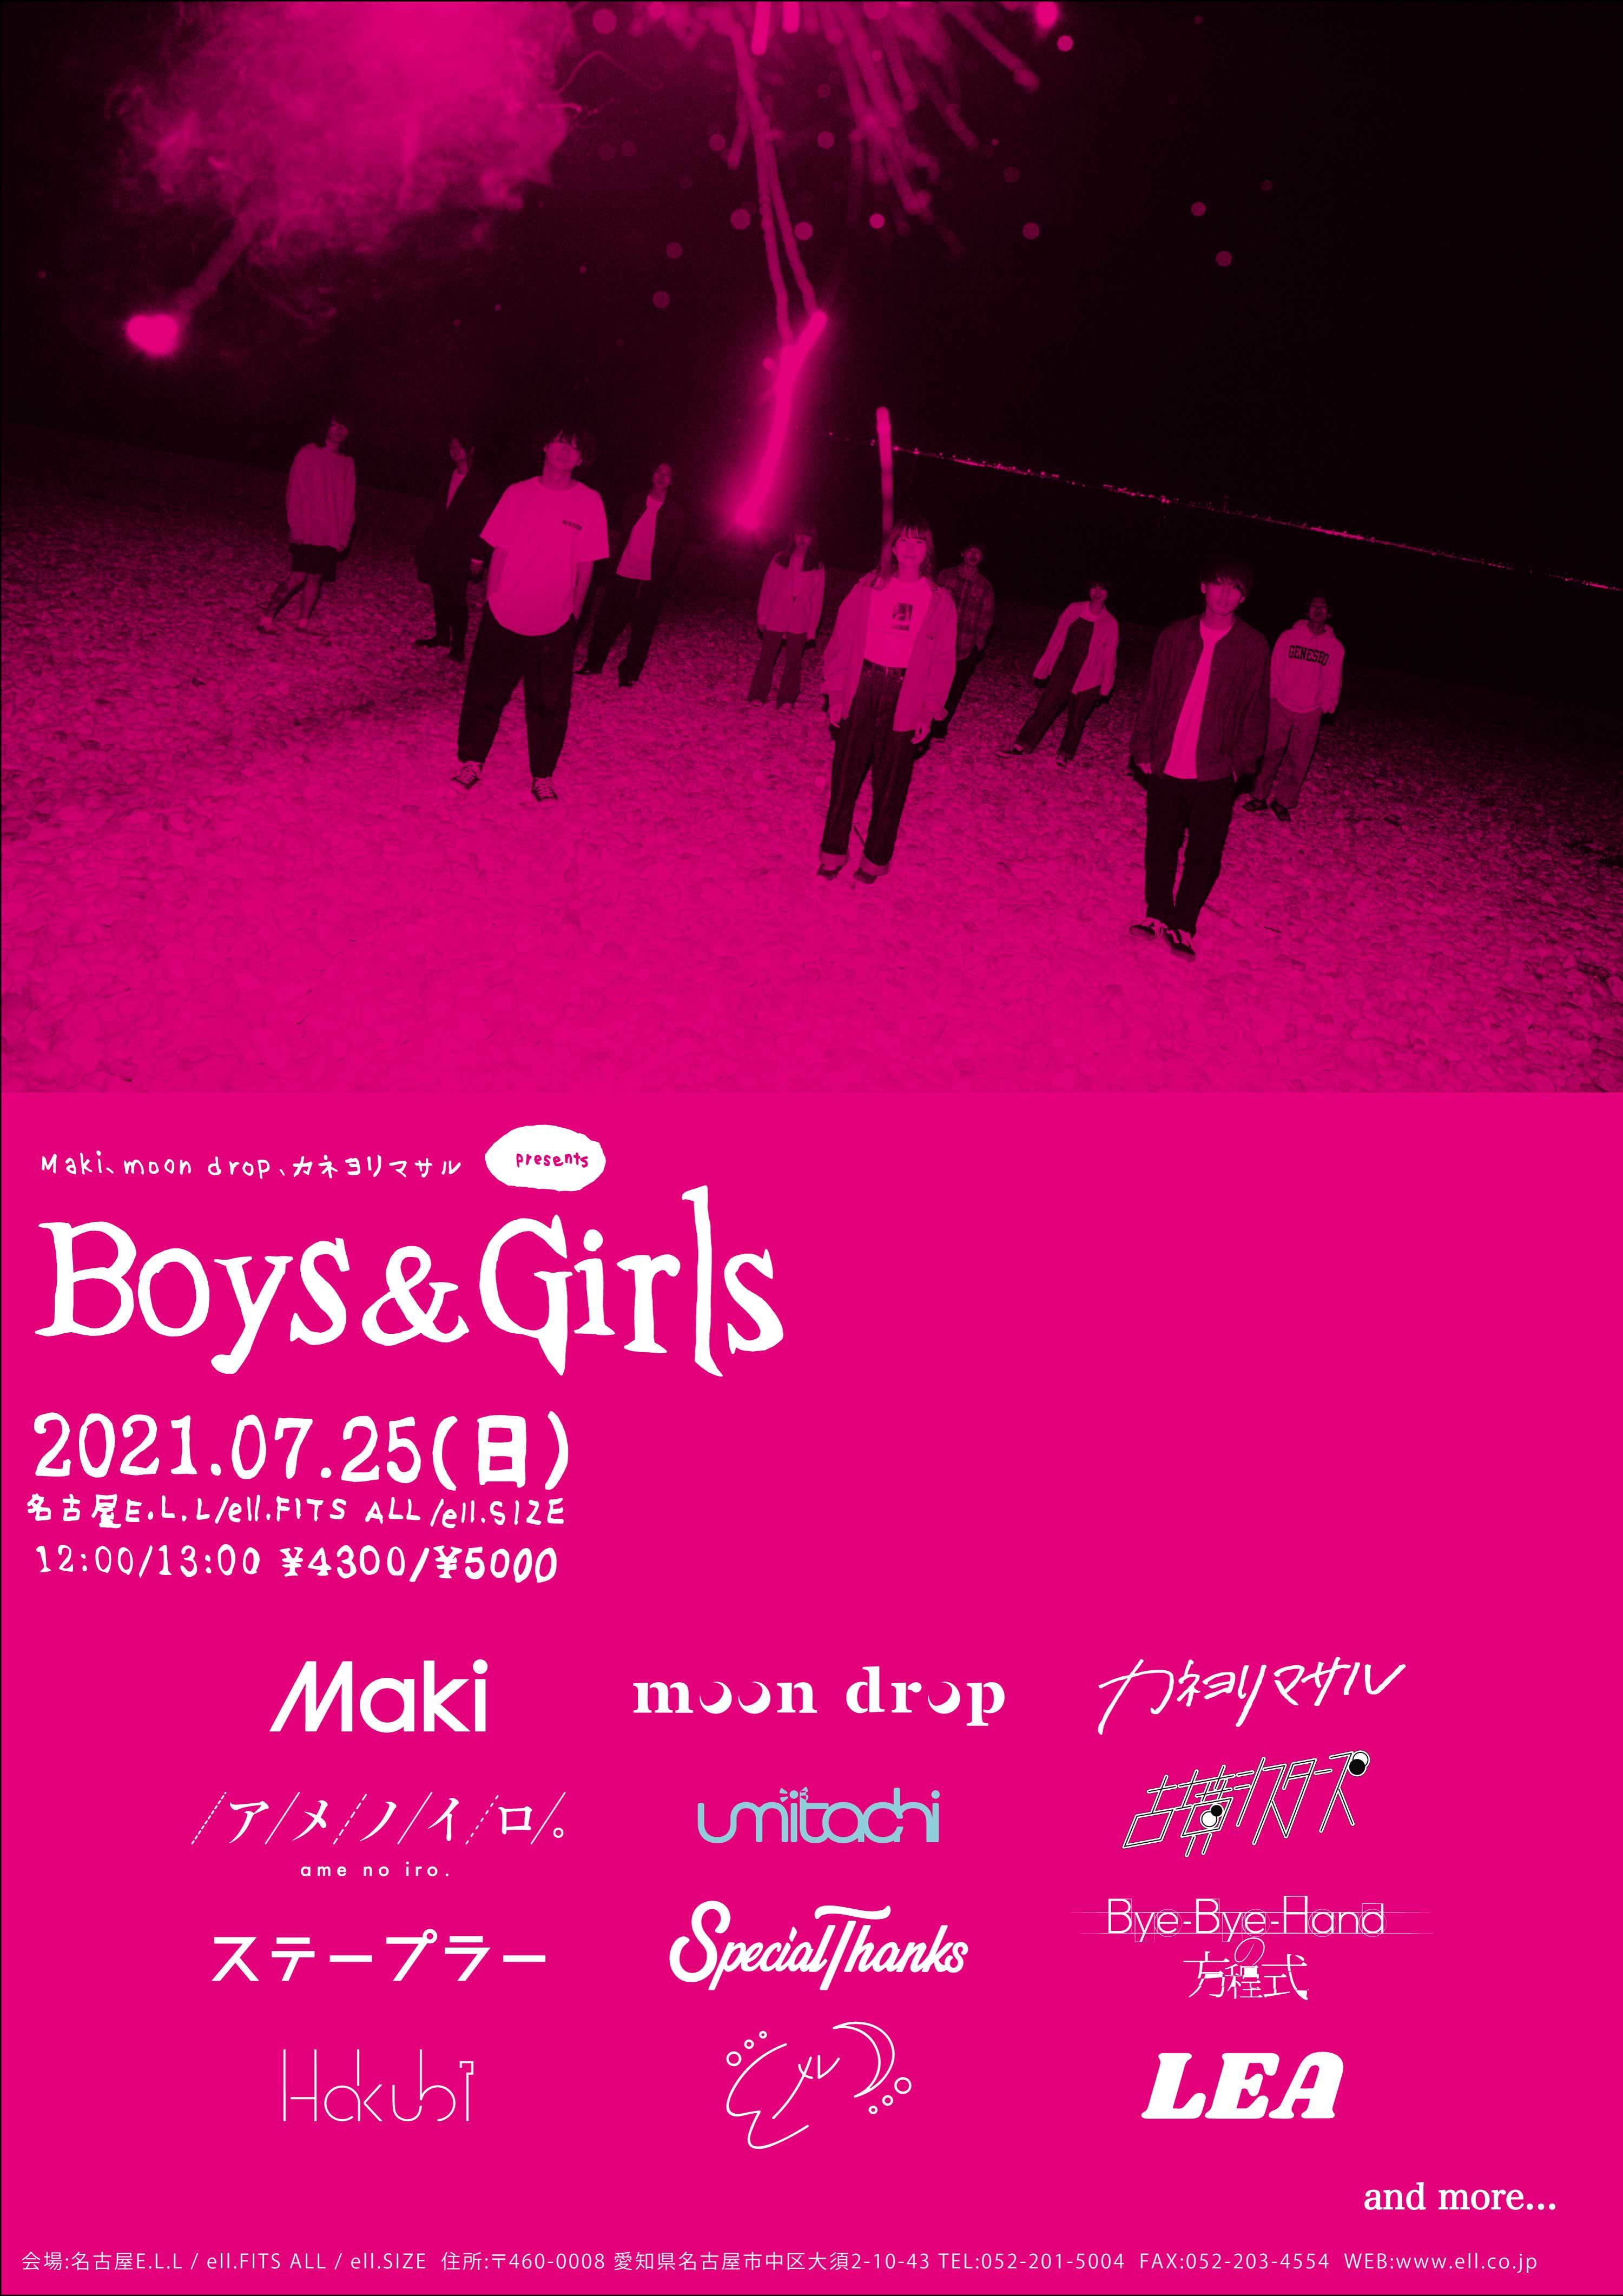 D.T.O.30.サーキットイベント『Boys & Girls』